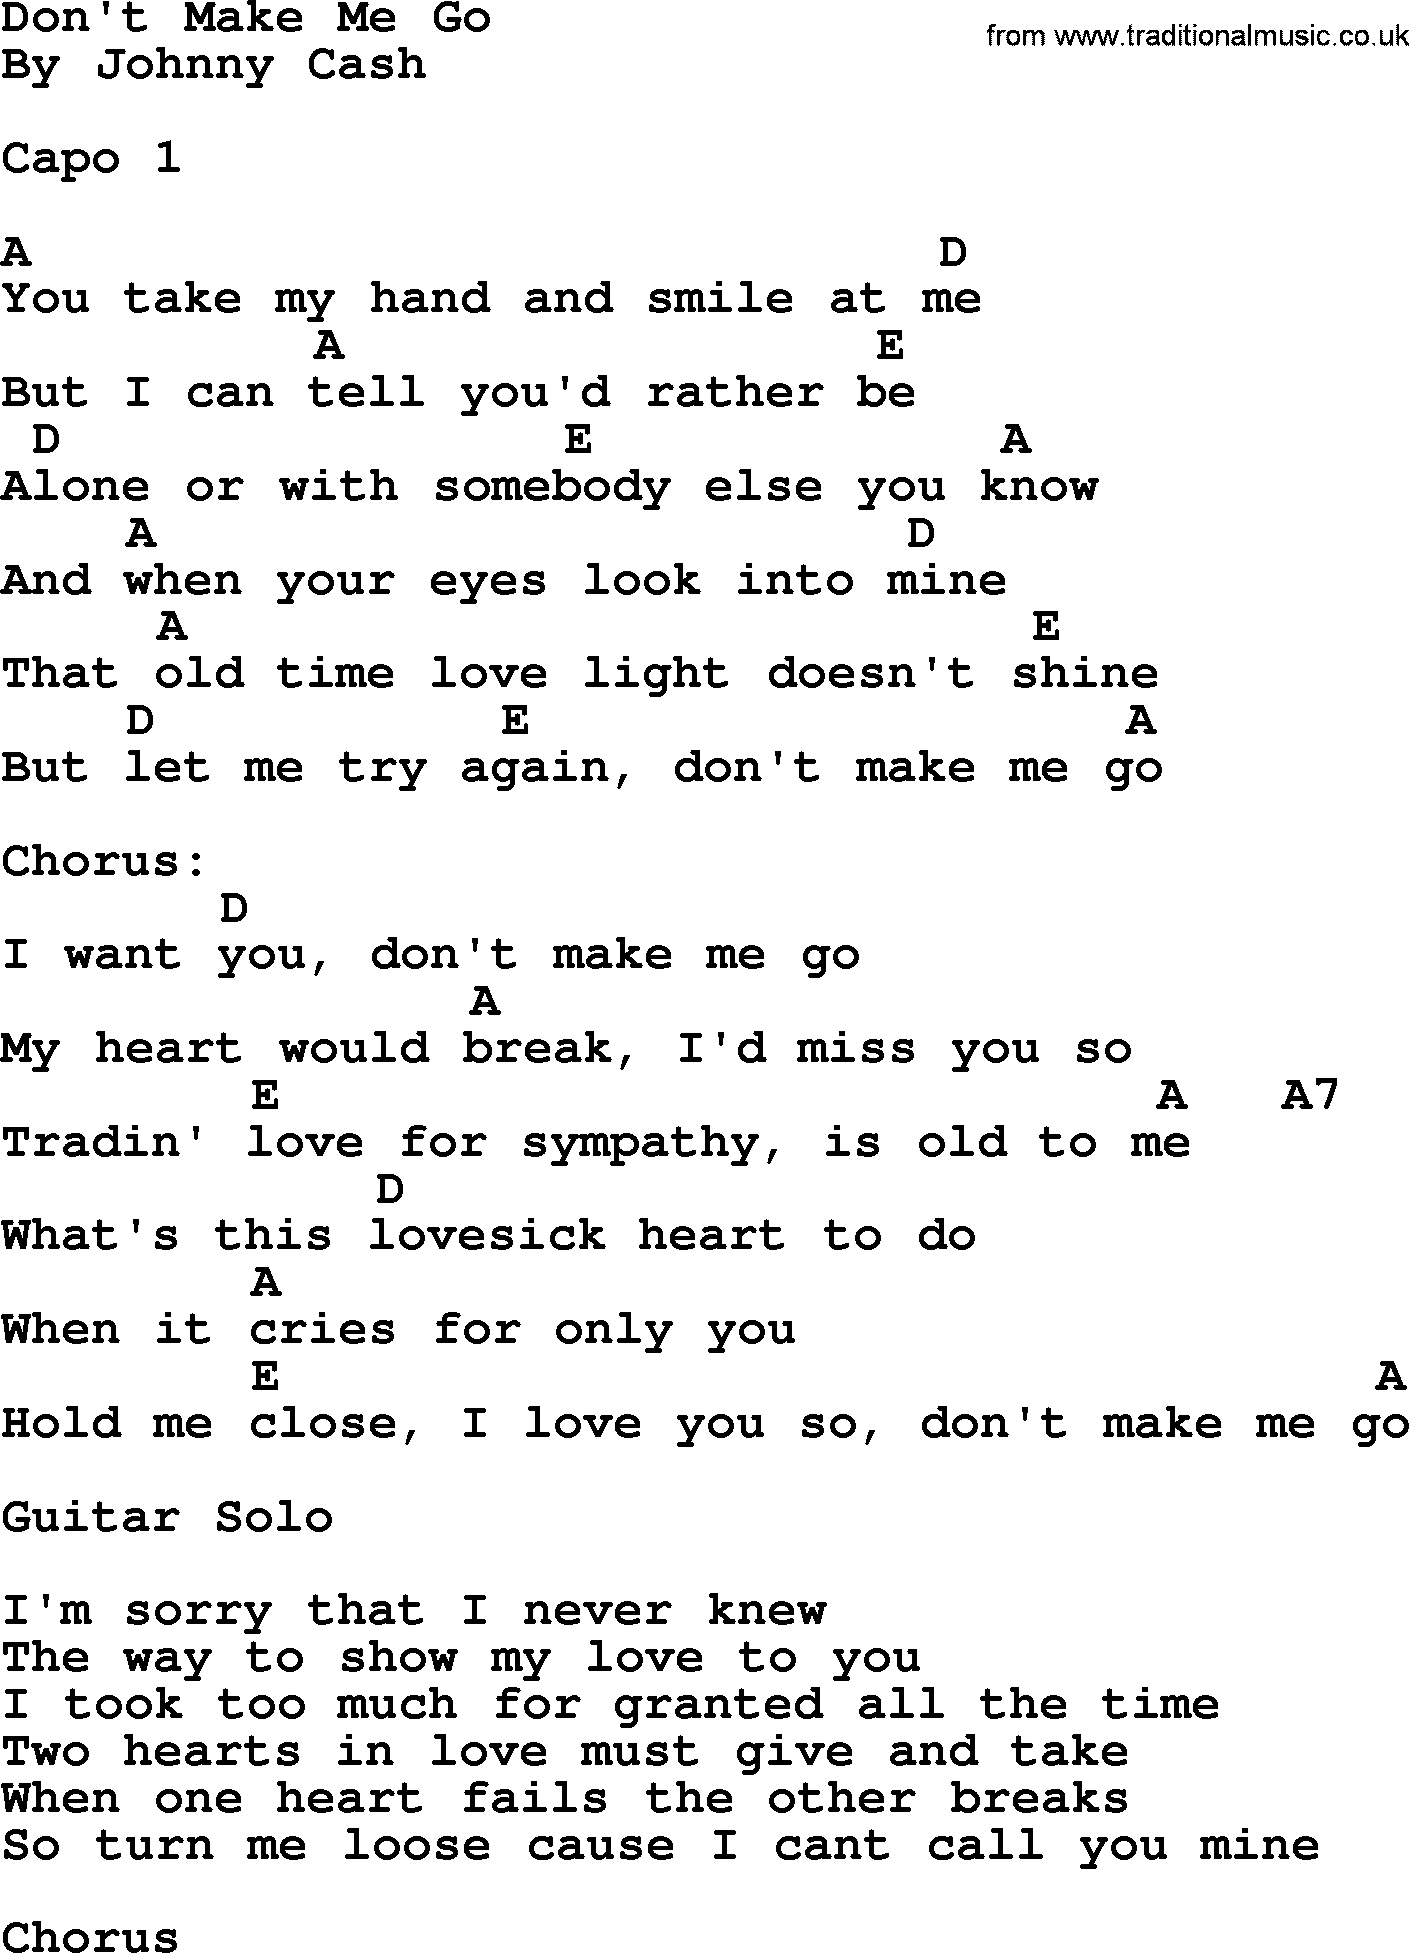 Johnny Cash song Don't Make Me Go, lyrics and chords